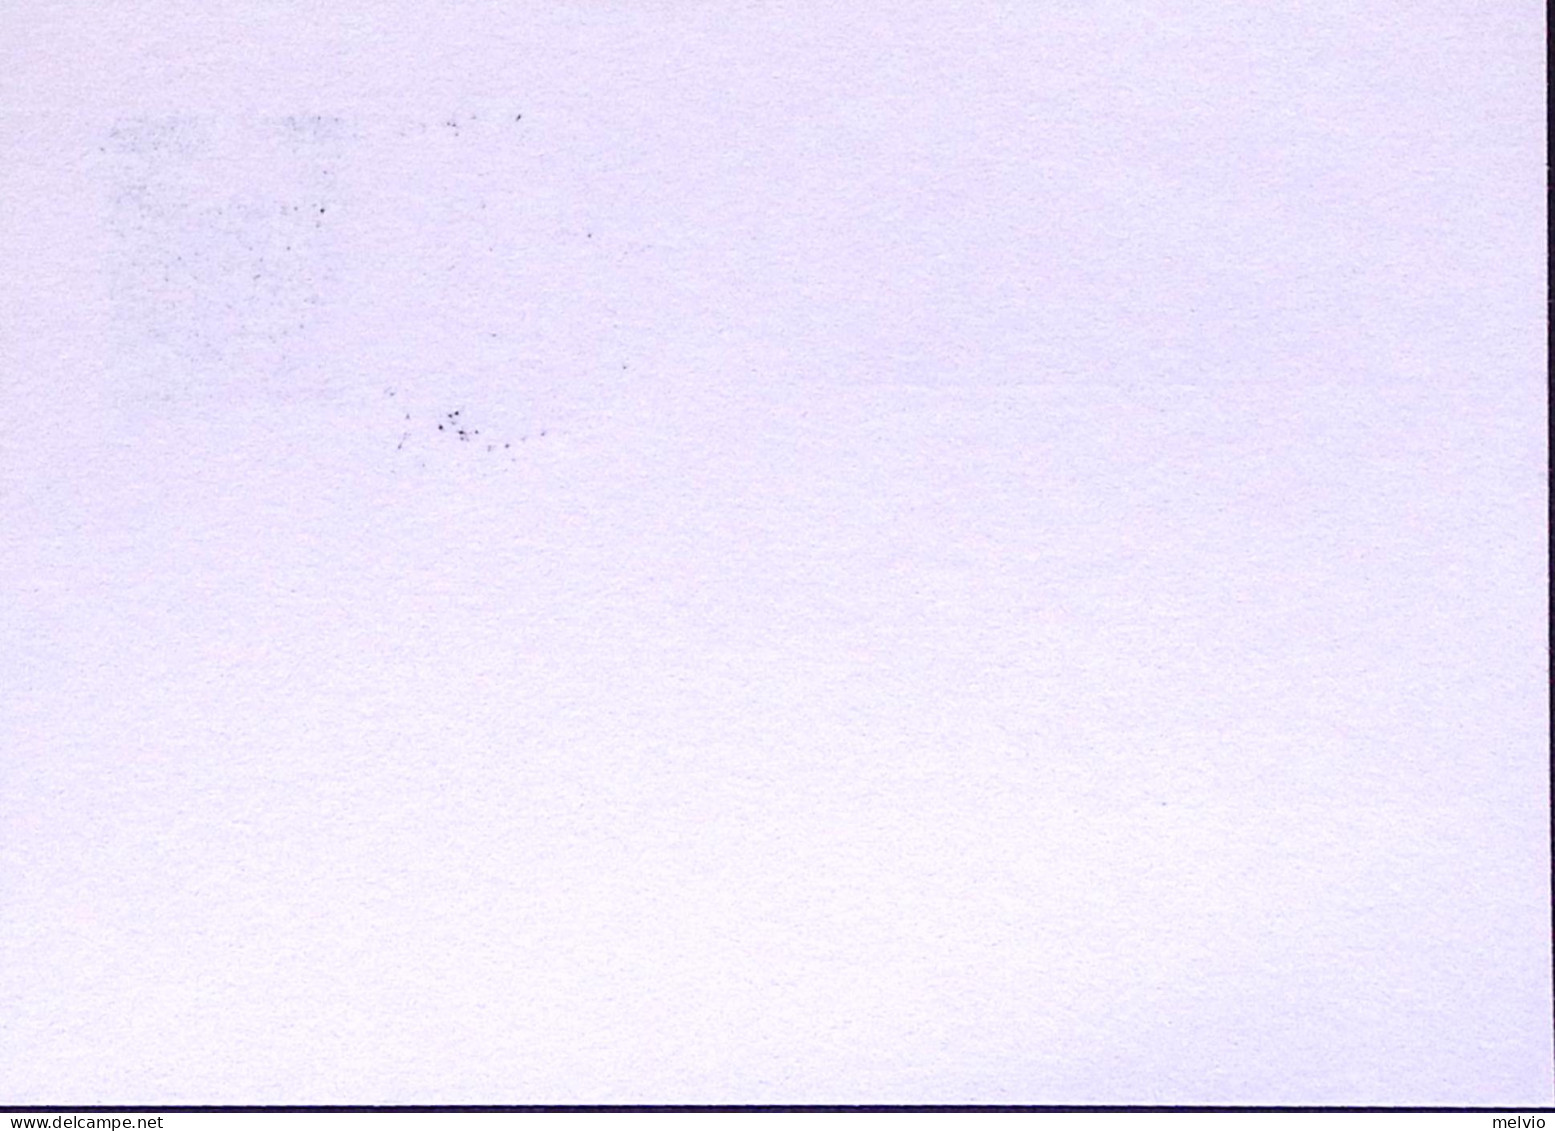 1993-SAN MINIATO (Pi) Cartolina Postale Castelli Lire 700, Soprastampato I.P.Z.S - Ganzsachen